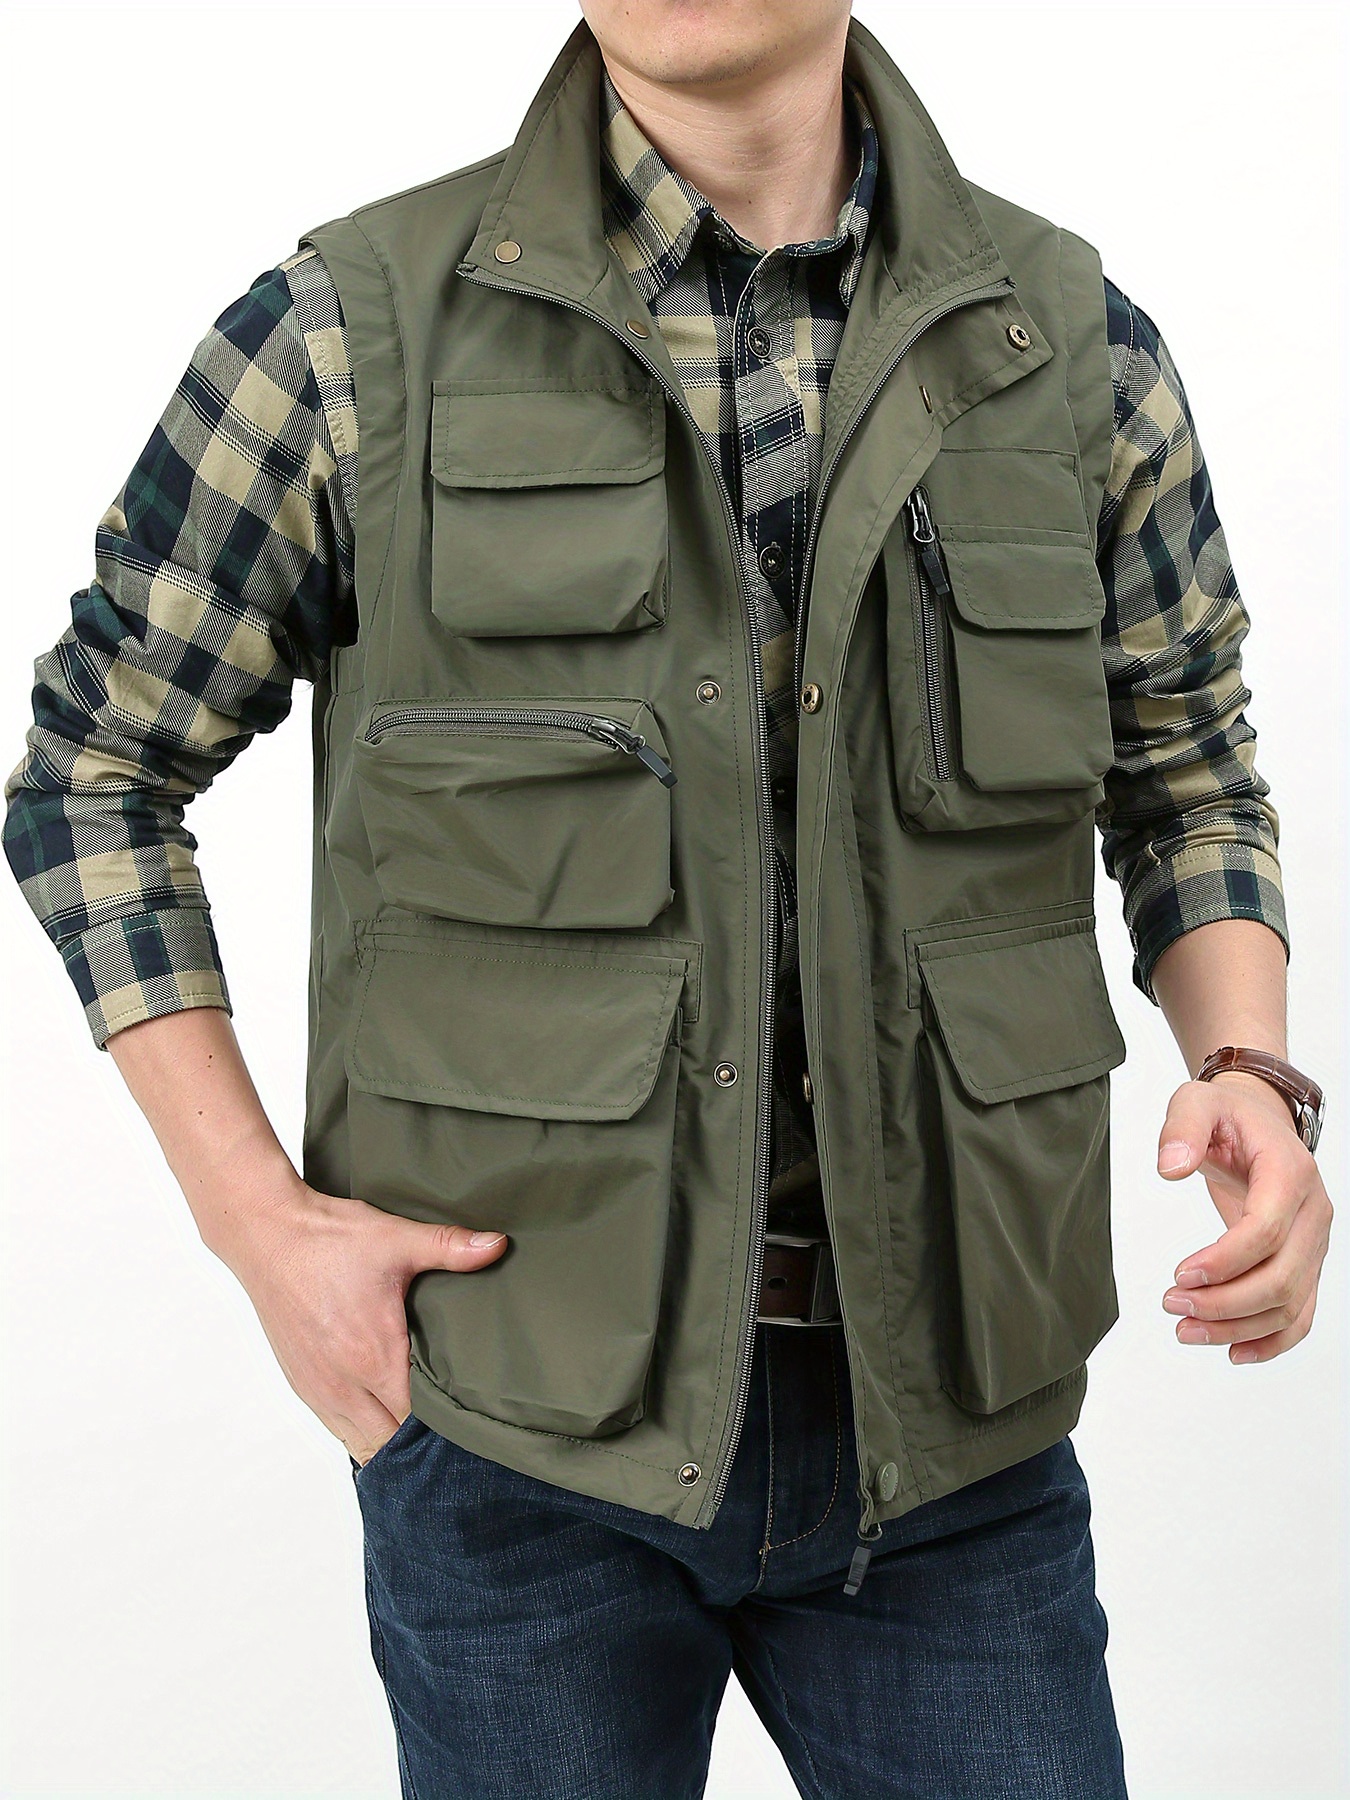 Zipper Pockets Cargo Vest, Men's Casual Outwear Stand Collar Zip Up Vest  For Summer Outdoor Fishing Photography